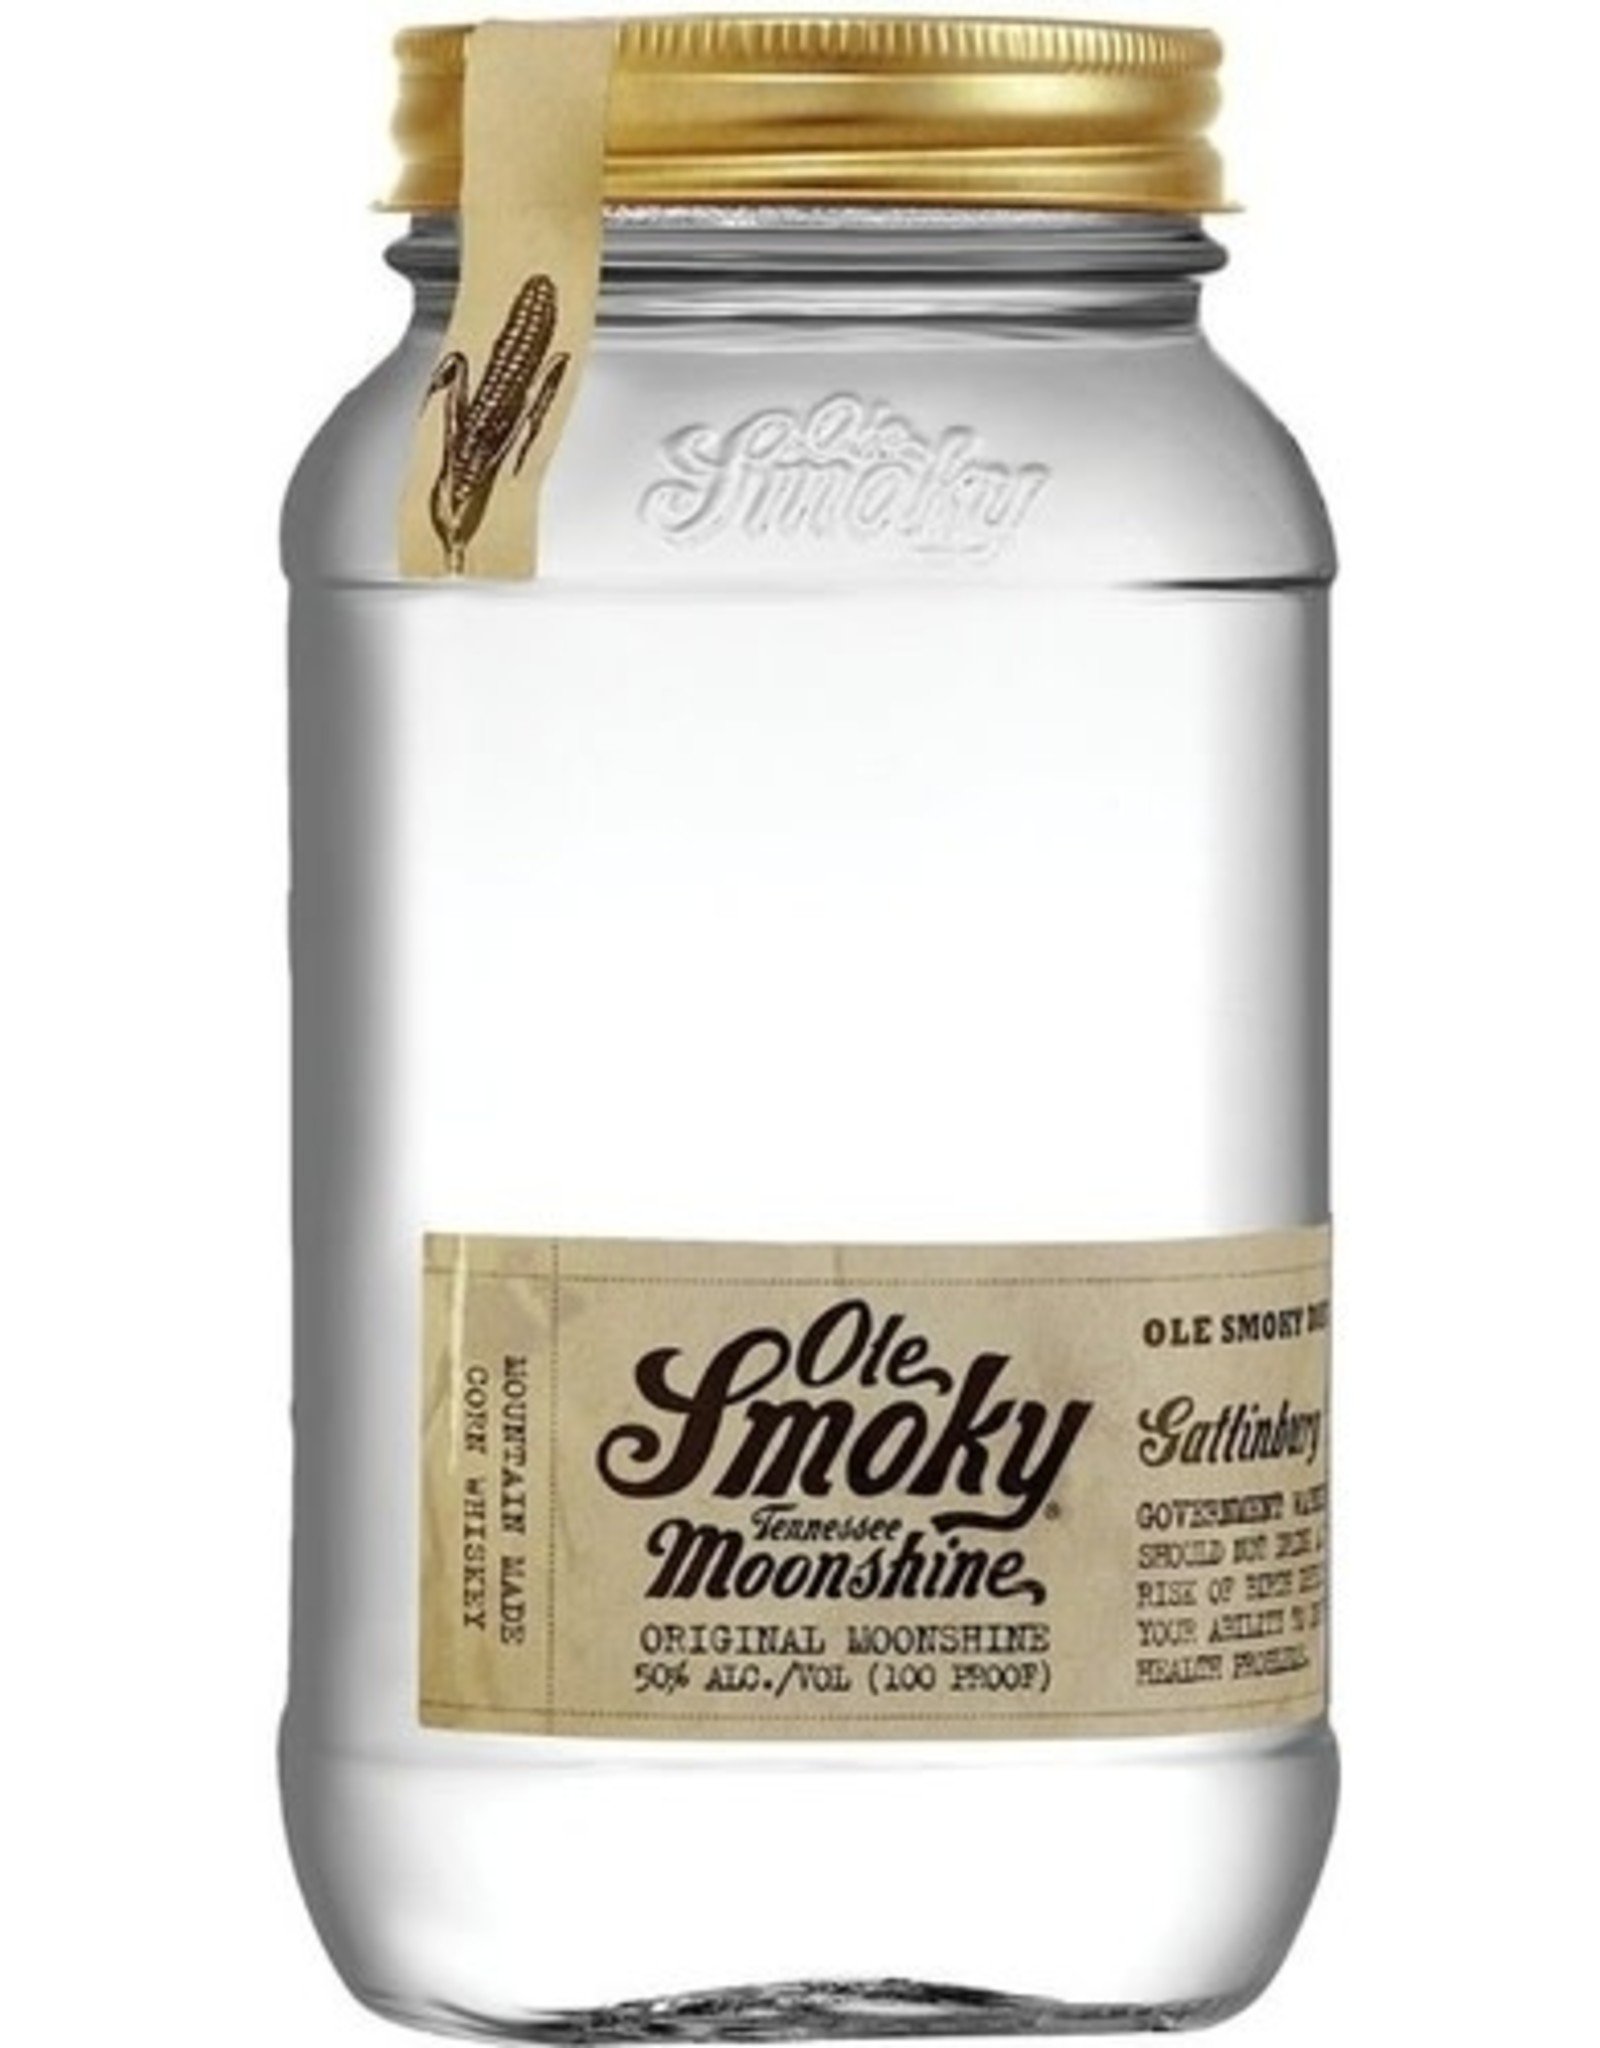 Does Ole Smoky moonshine need refrigerated?